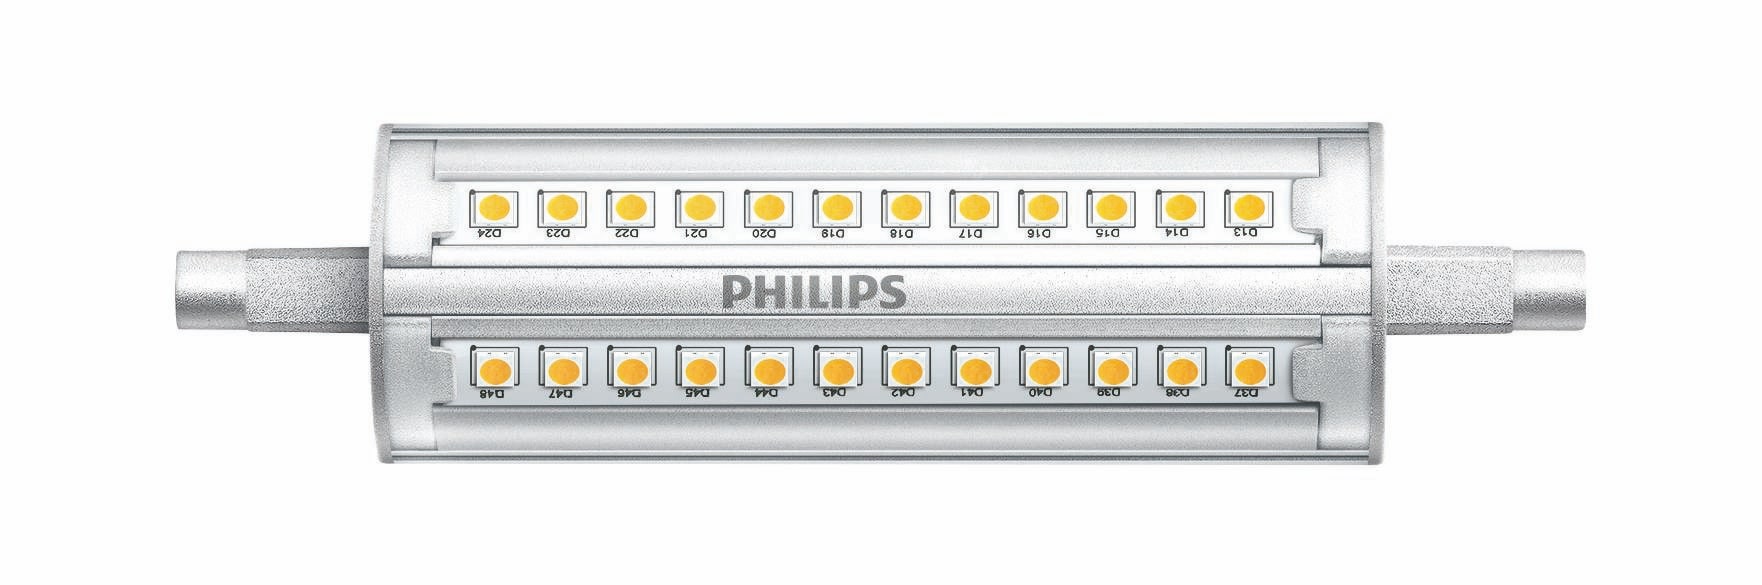 Philips 57879700 CorePro LEDlinear Hochvolt-Stablampen, 14 W, 830, 1600 lm, R7s, dimmbar